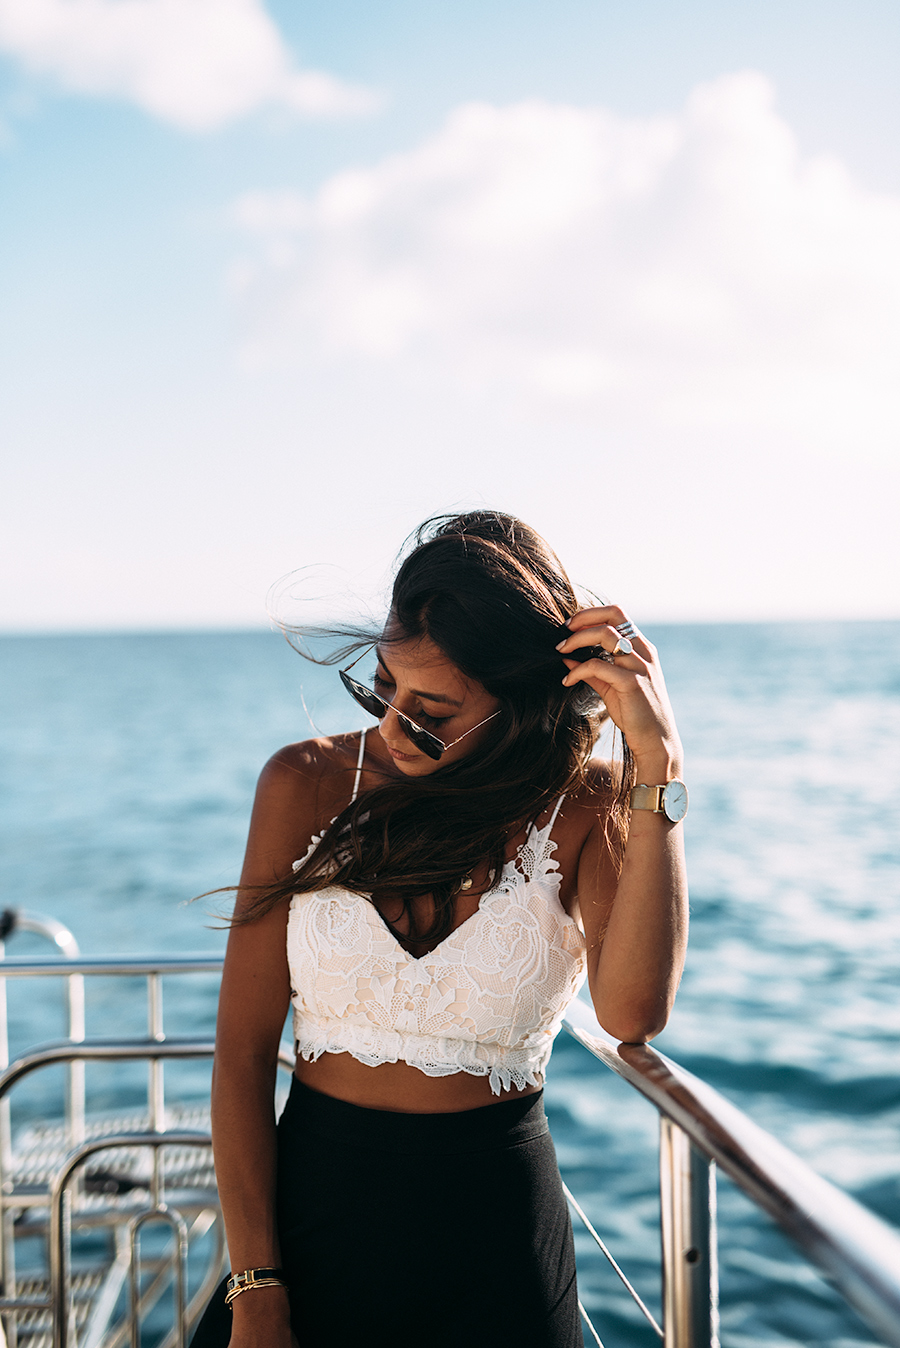 na pali coast boat ride kauai catamaran hawaii boat tour blogger blog travel guide not your standard kayla seah sunset golden hour armani beauty model girl style fashion inspiration